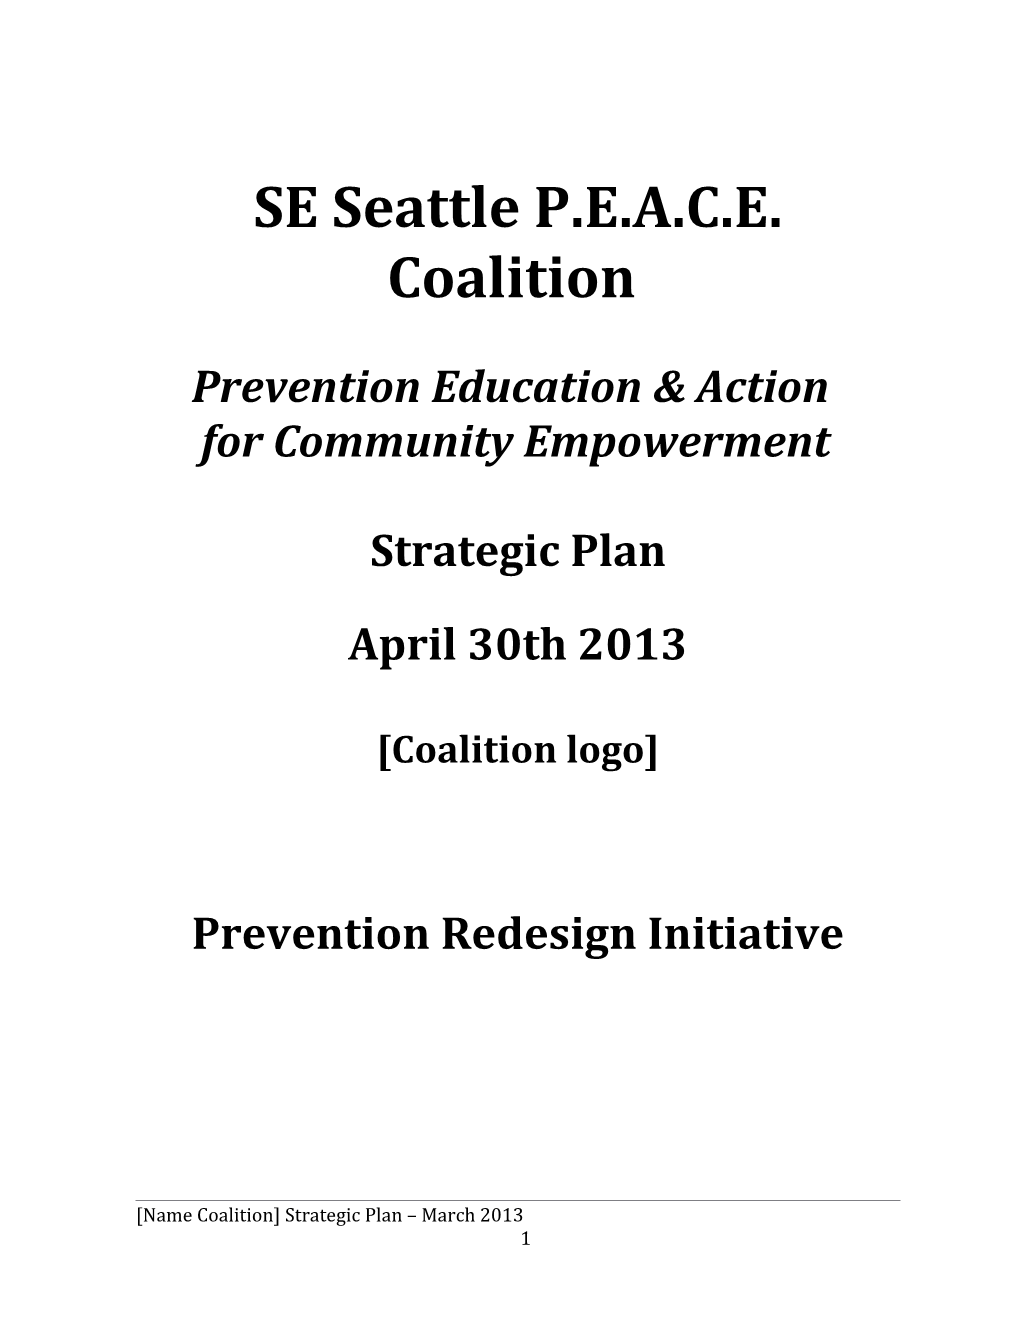 SE Seattle P.E.A.C.E. Coalition